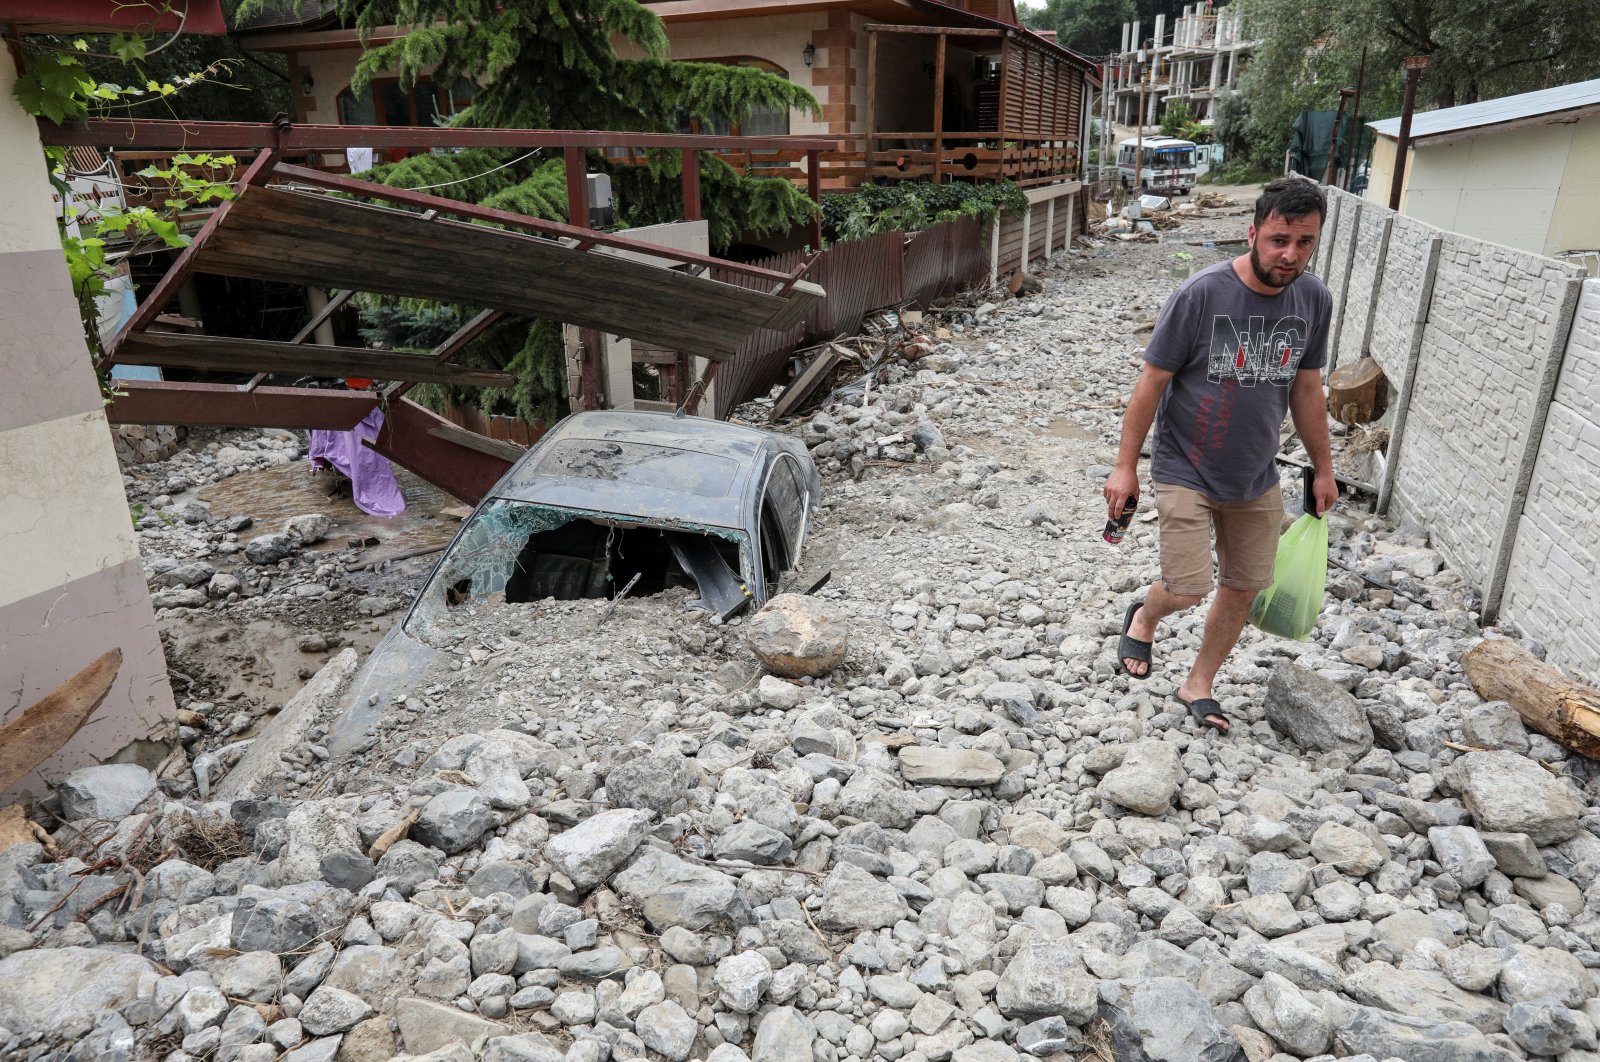 A man walks along a damaged street after heavy rainfall and floods in Yalta, Crimea, June 22, 2021. (Reuters Photo)